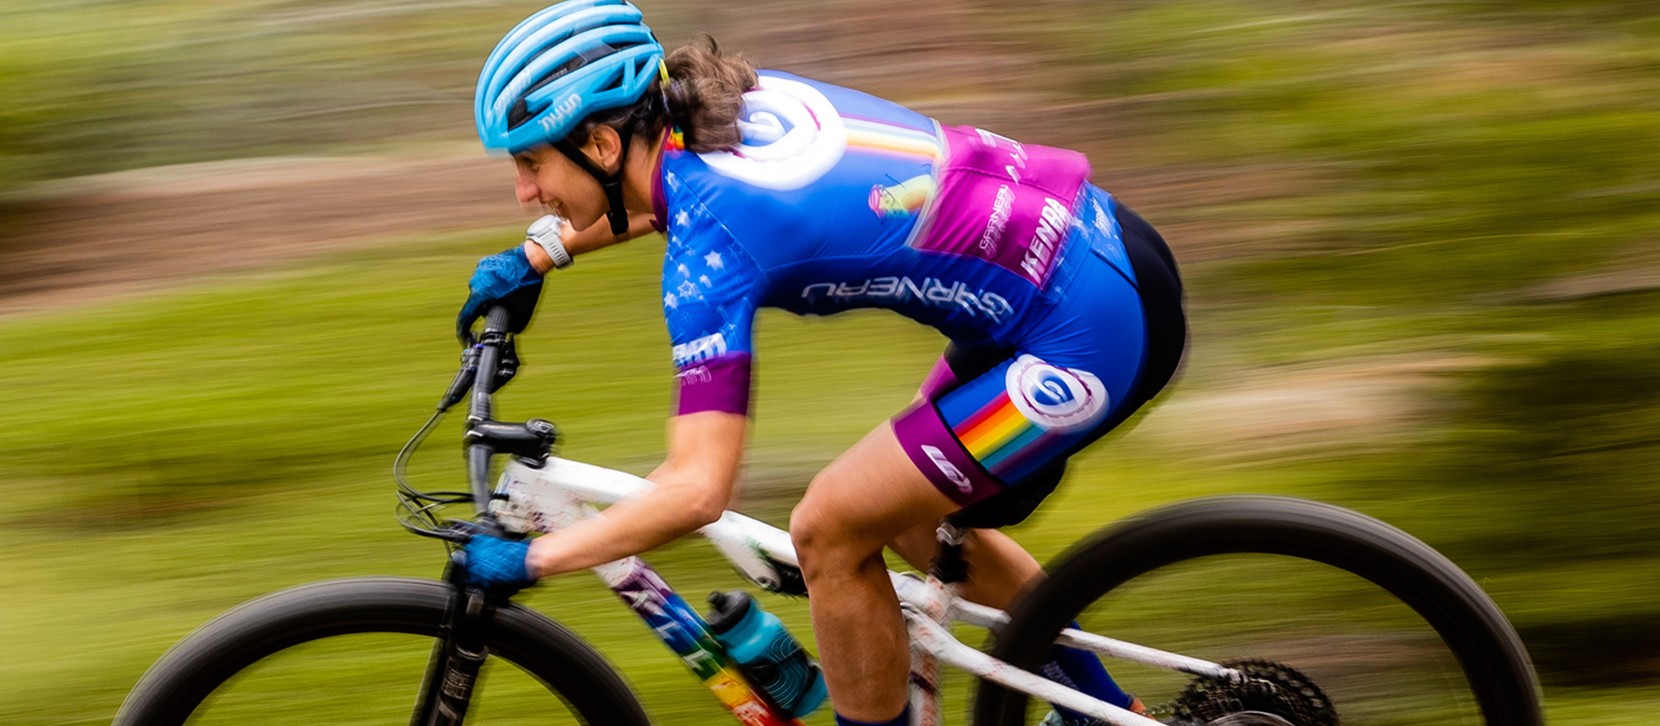 Lea Davison riding fast on her mountain bike.